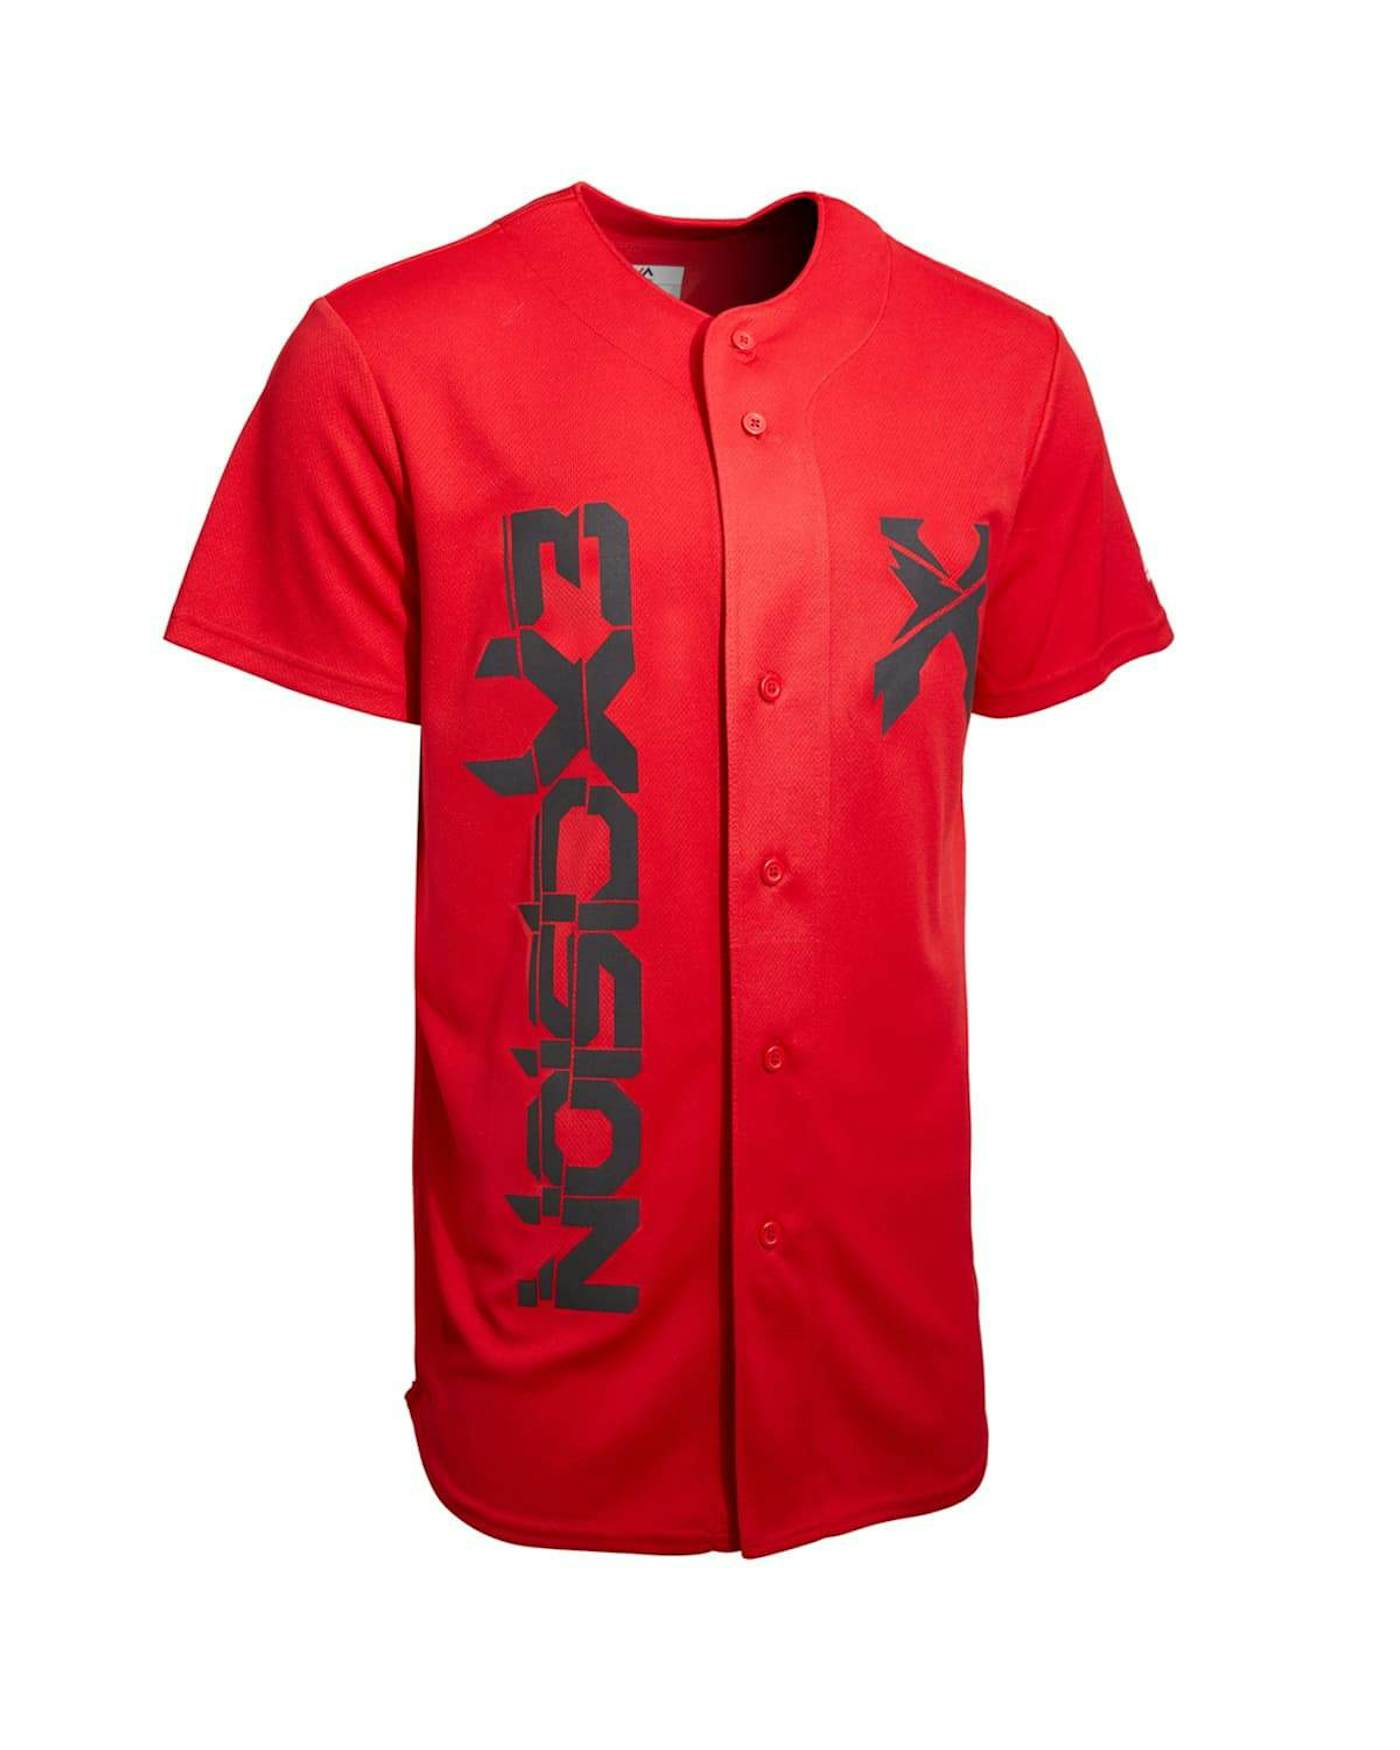 Grunge excision t-rex headbanger baseball jersey for EDM festivals